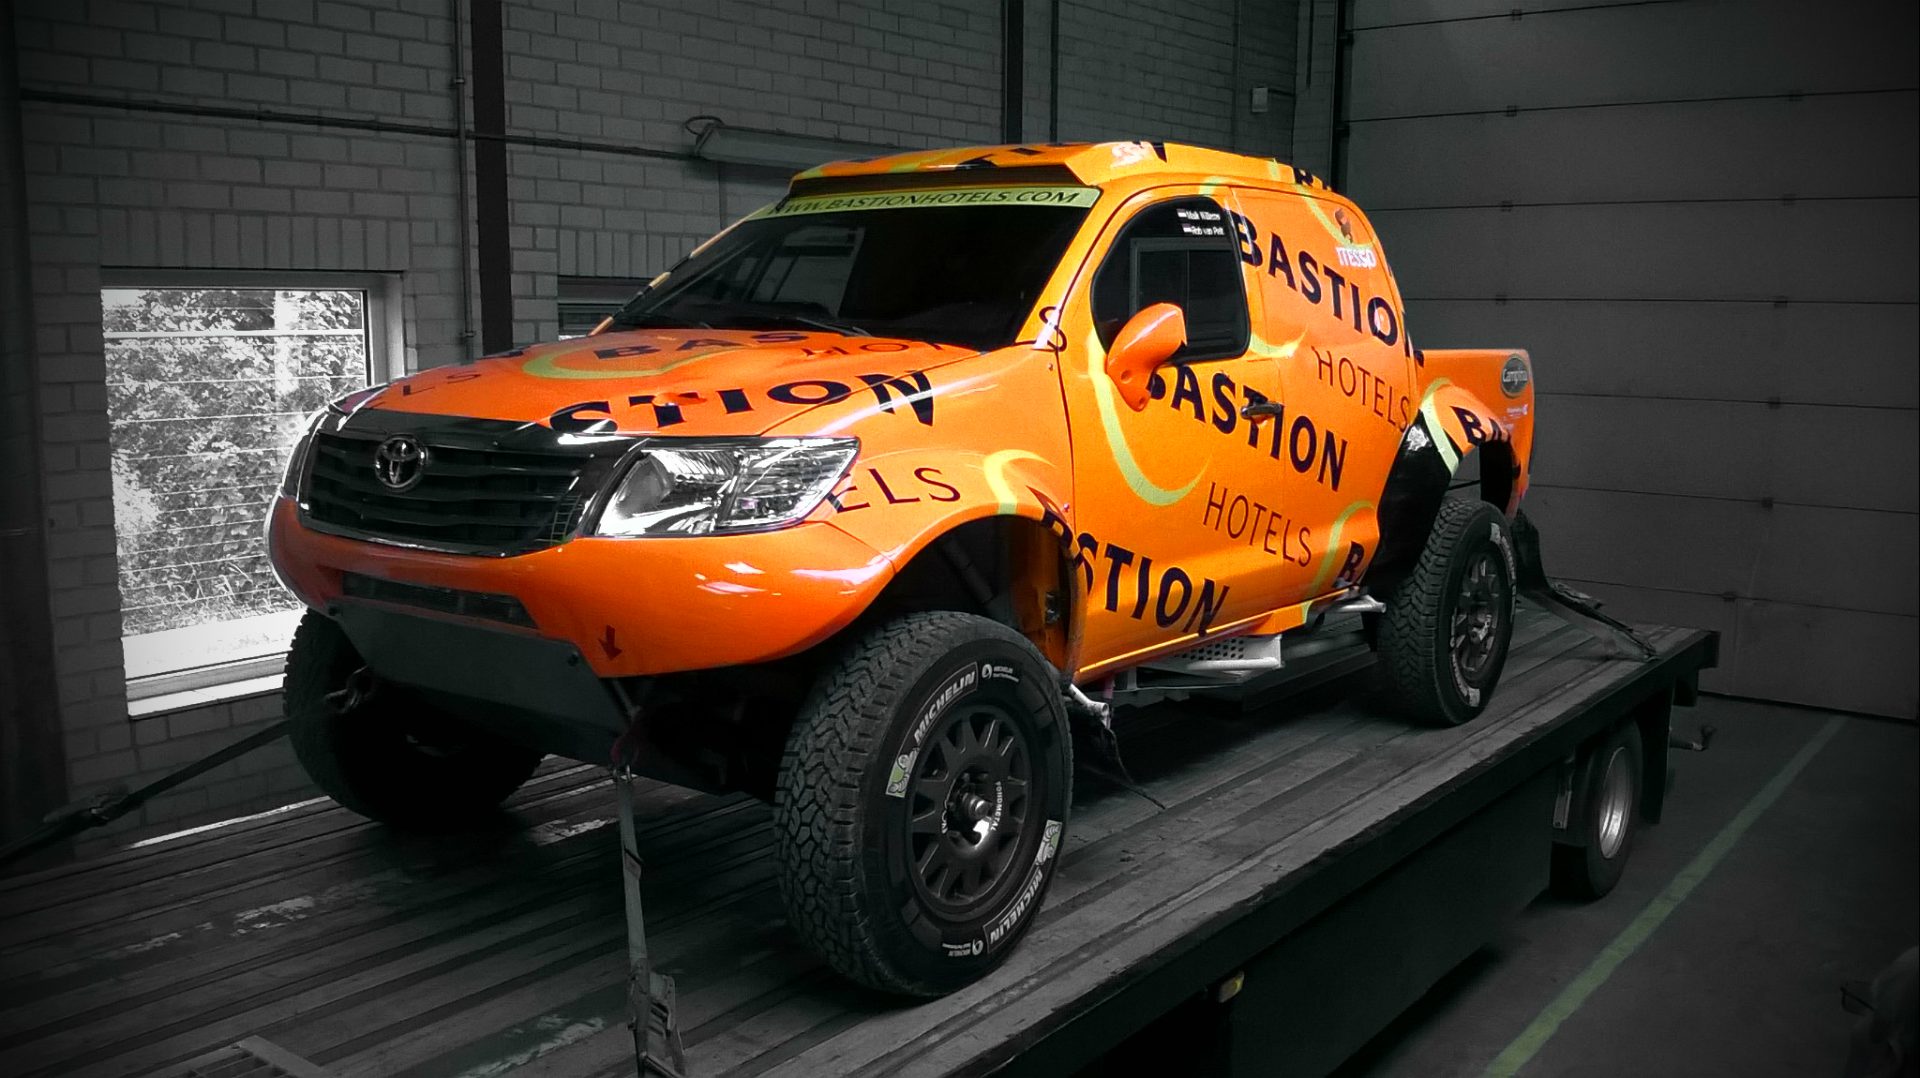 Toyota Hilux V8 - Bastion Hotels Dakar Team